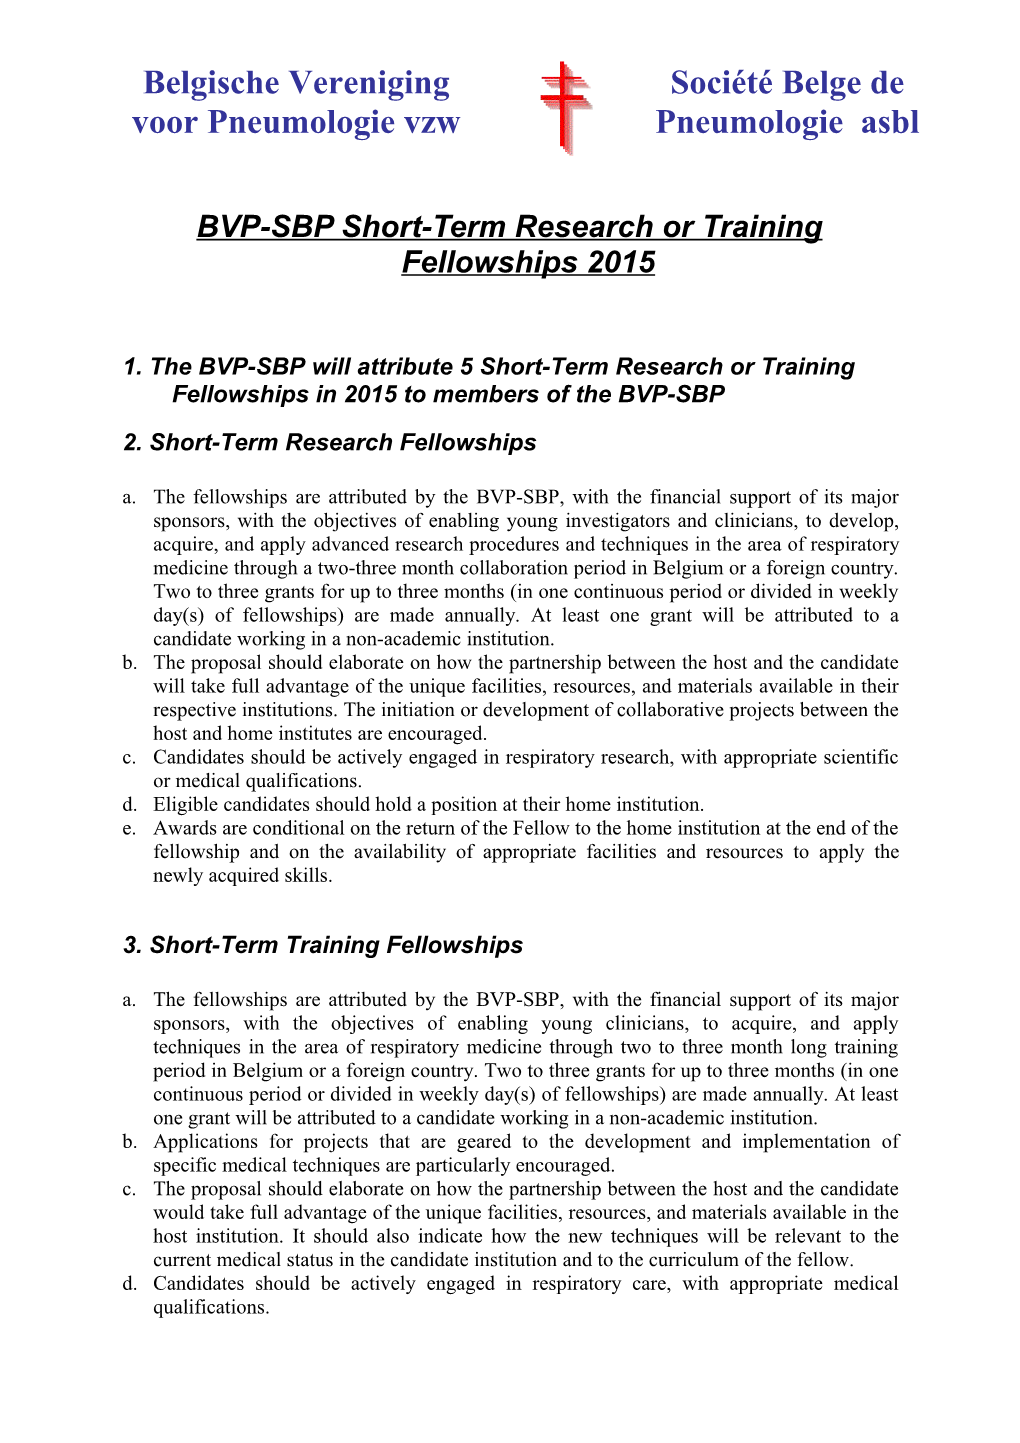 BVP-SBP Short-Term Research Or Training Fellowships 2015